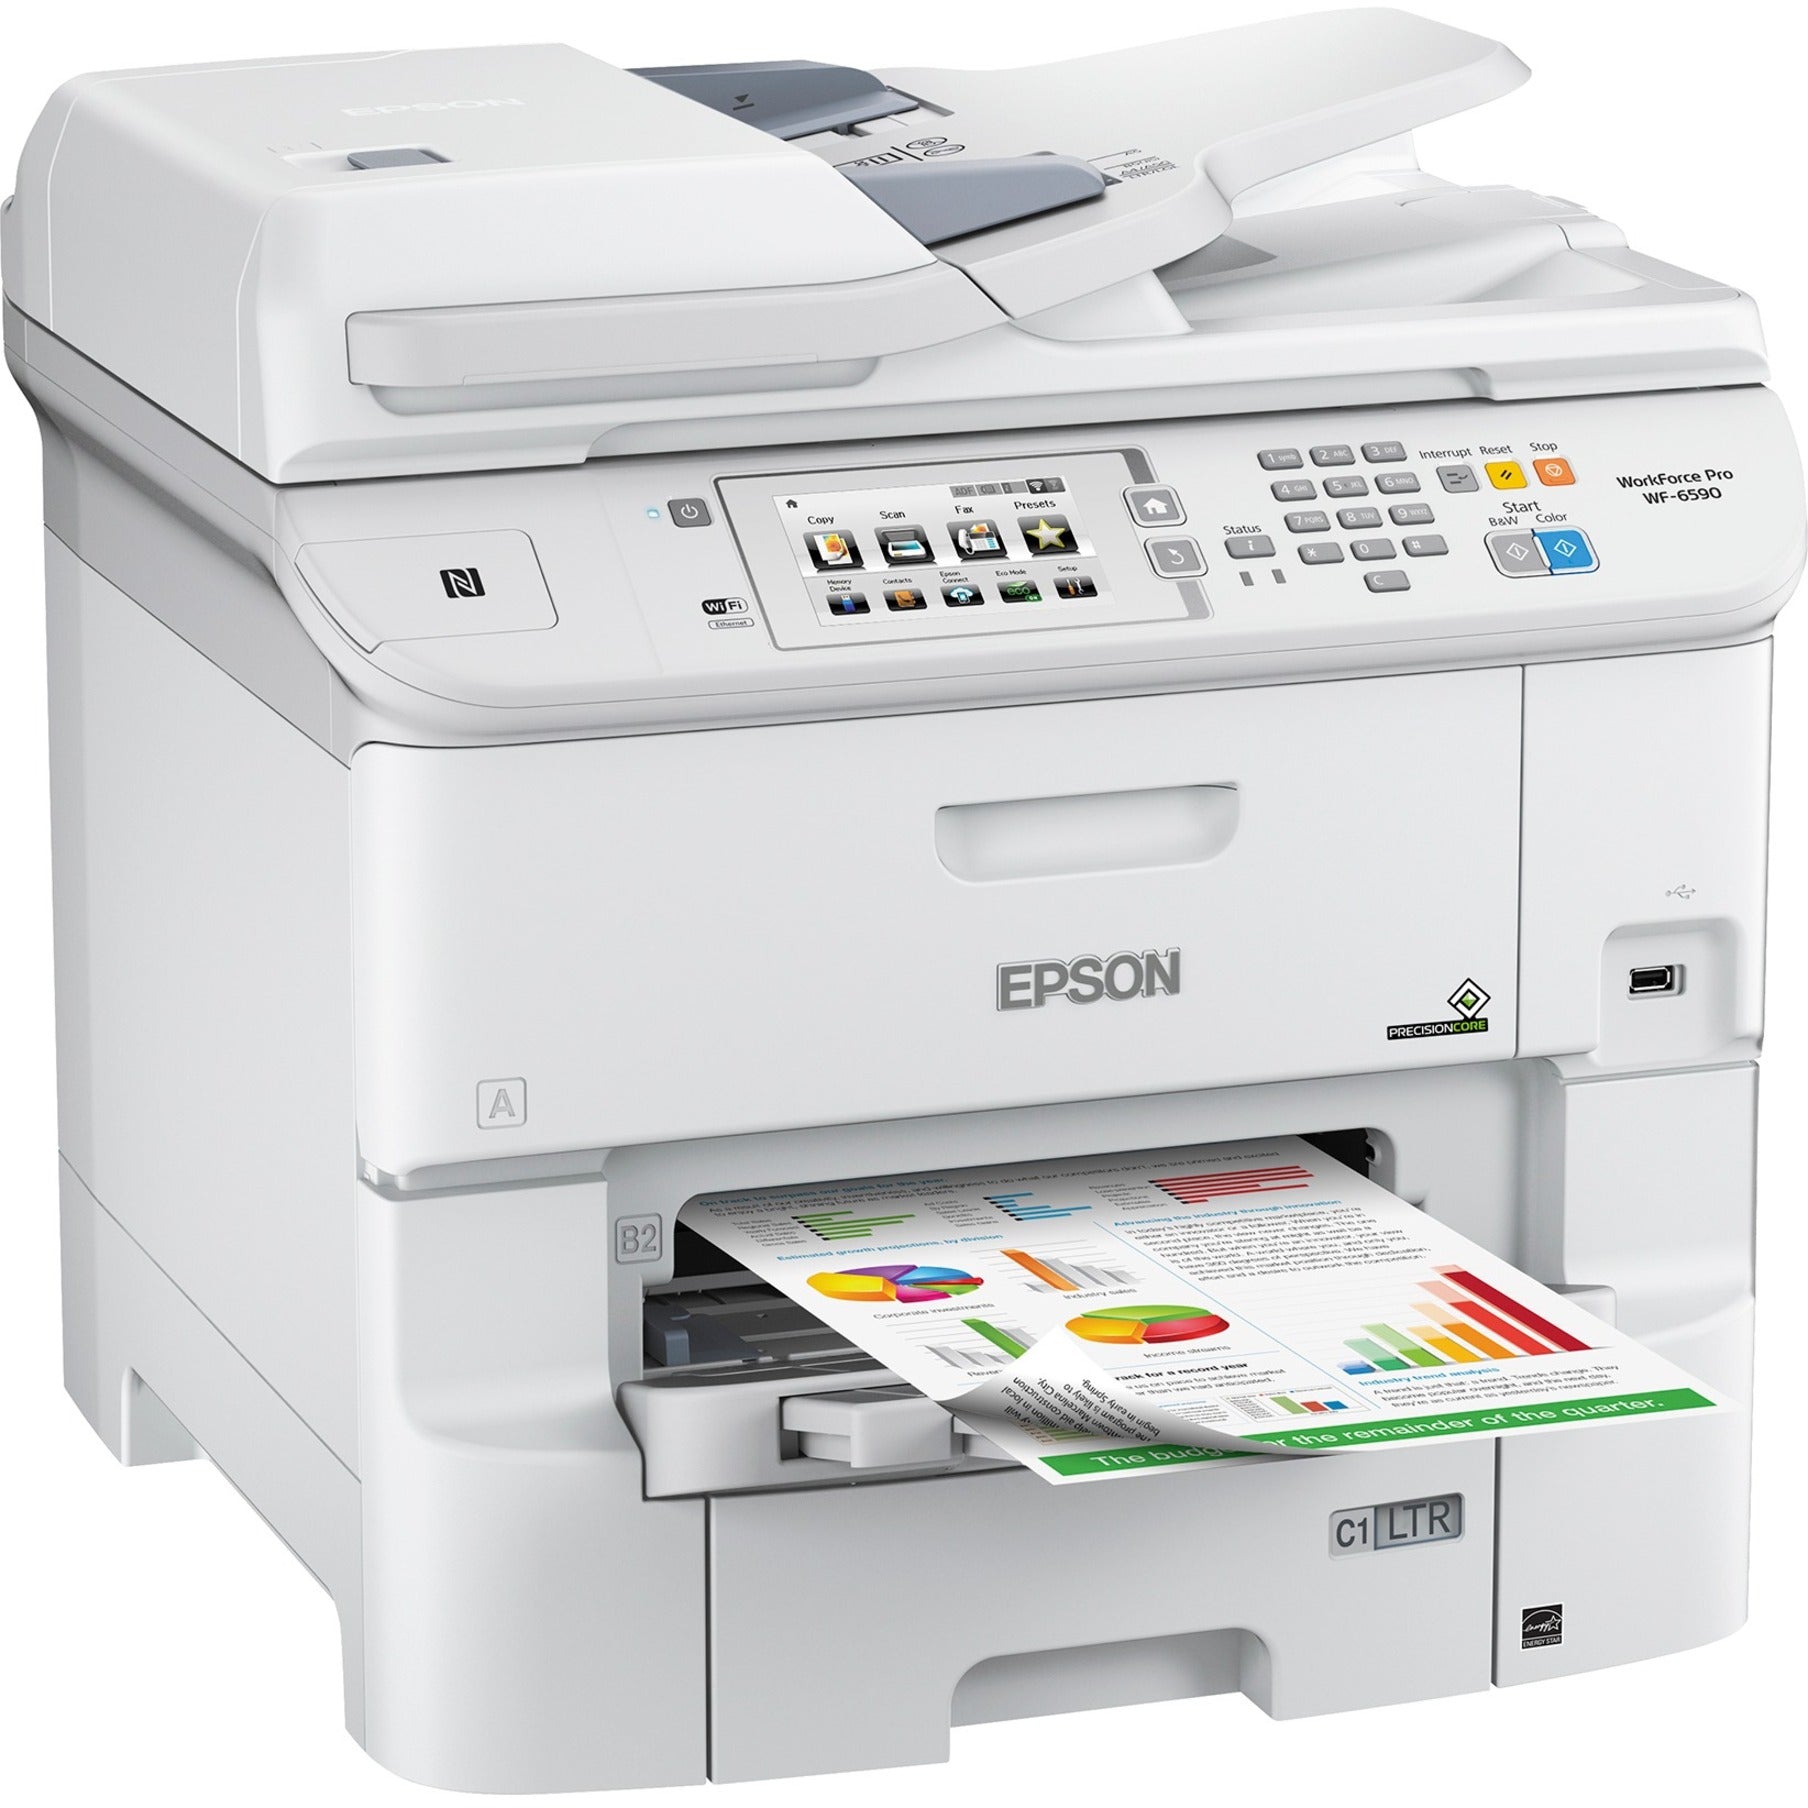 Epson C11CD49201-NA WorkForce Pro WF-6590 Network Multifunction Color Printer, Wireless, Duplex Printing, 4800 x 1200 dpi